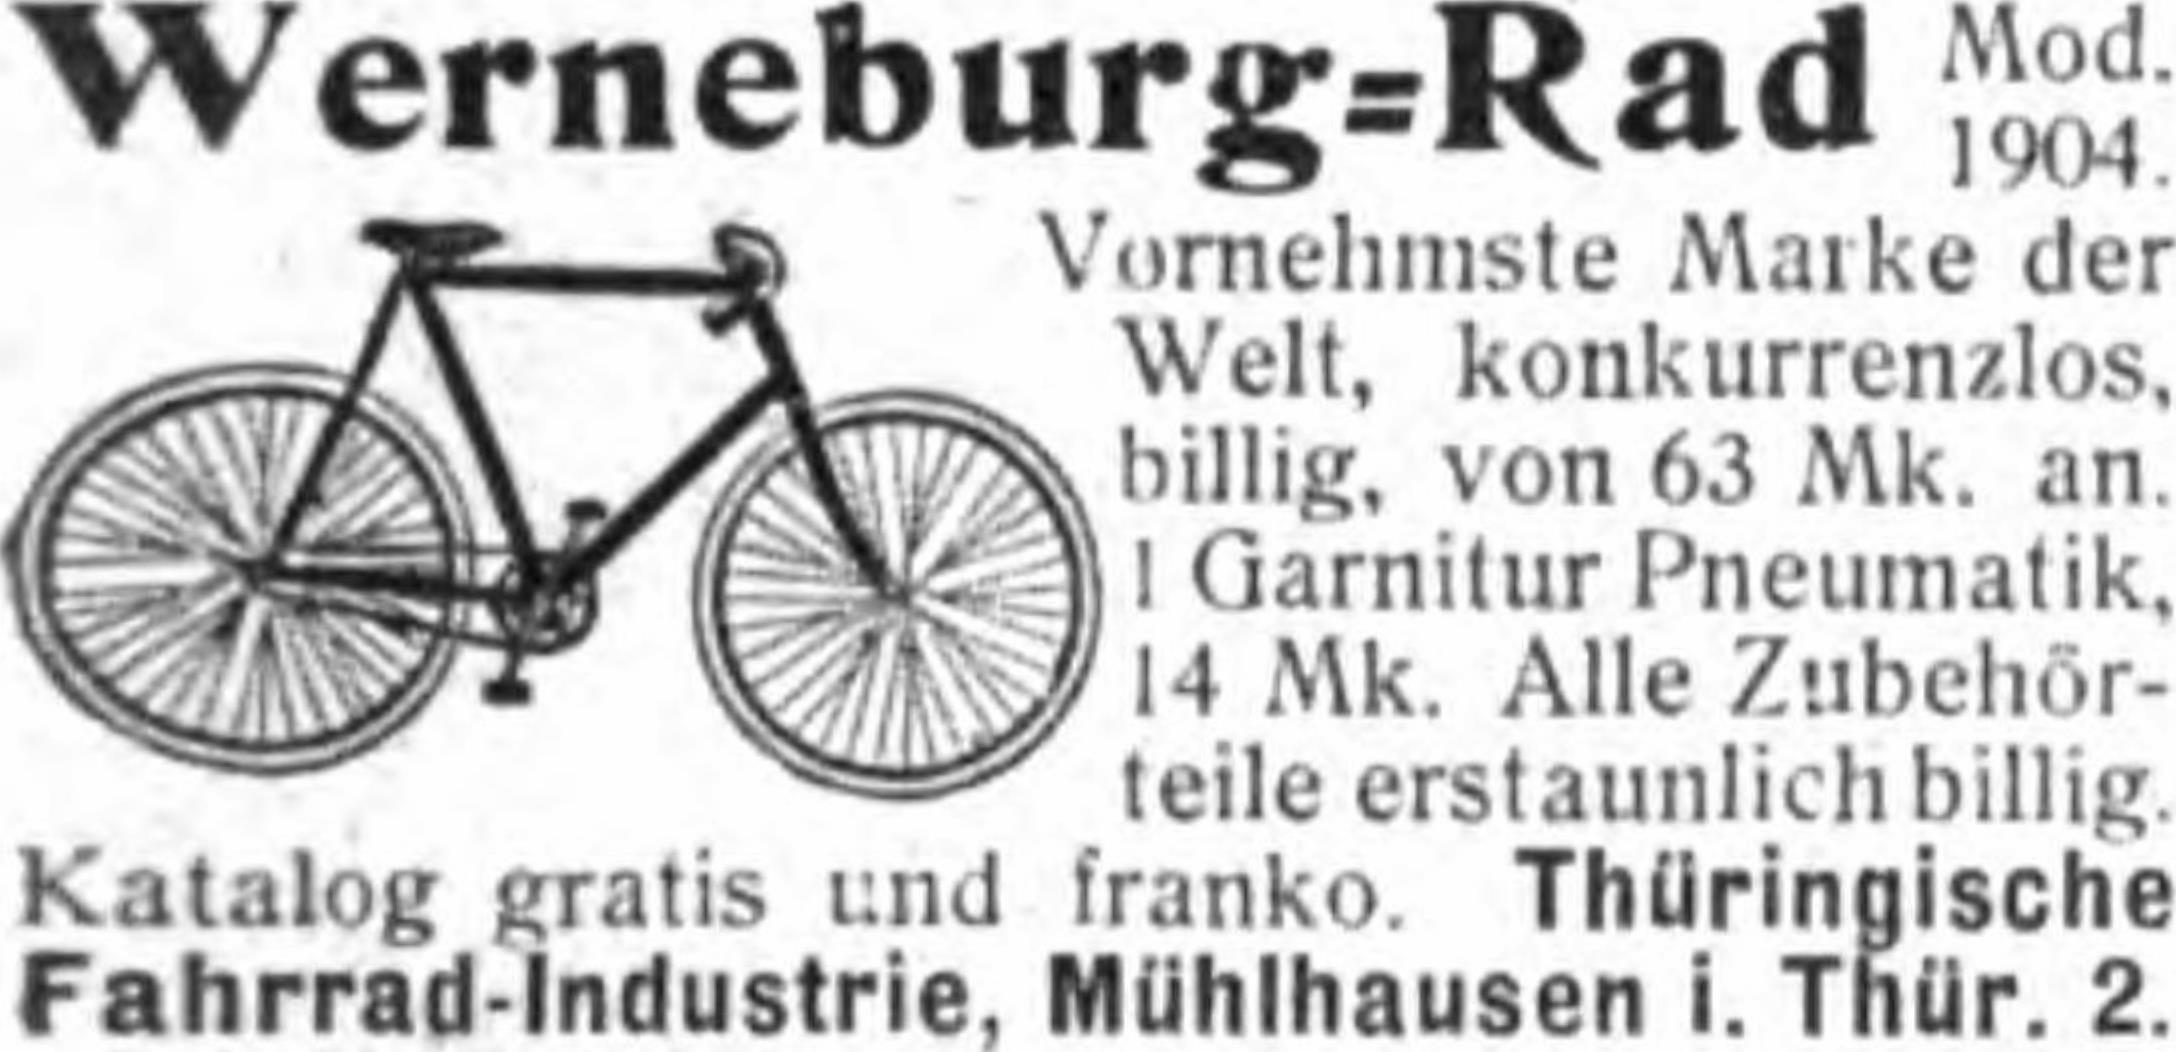 Werneburg 1904 185.jpg